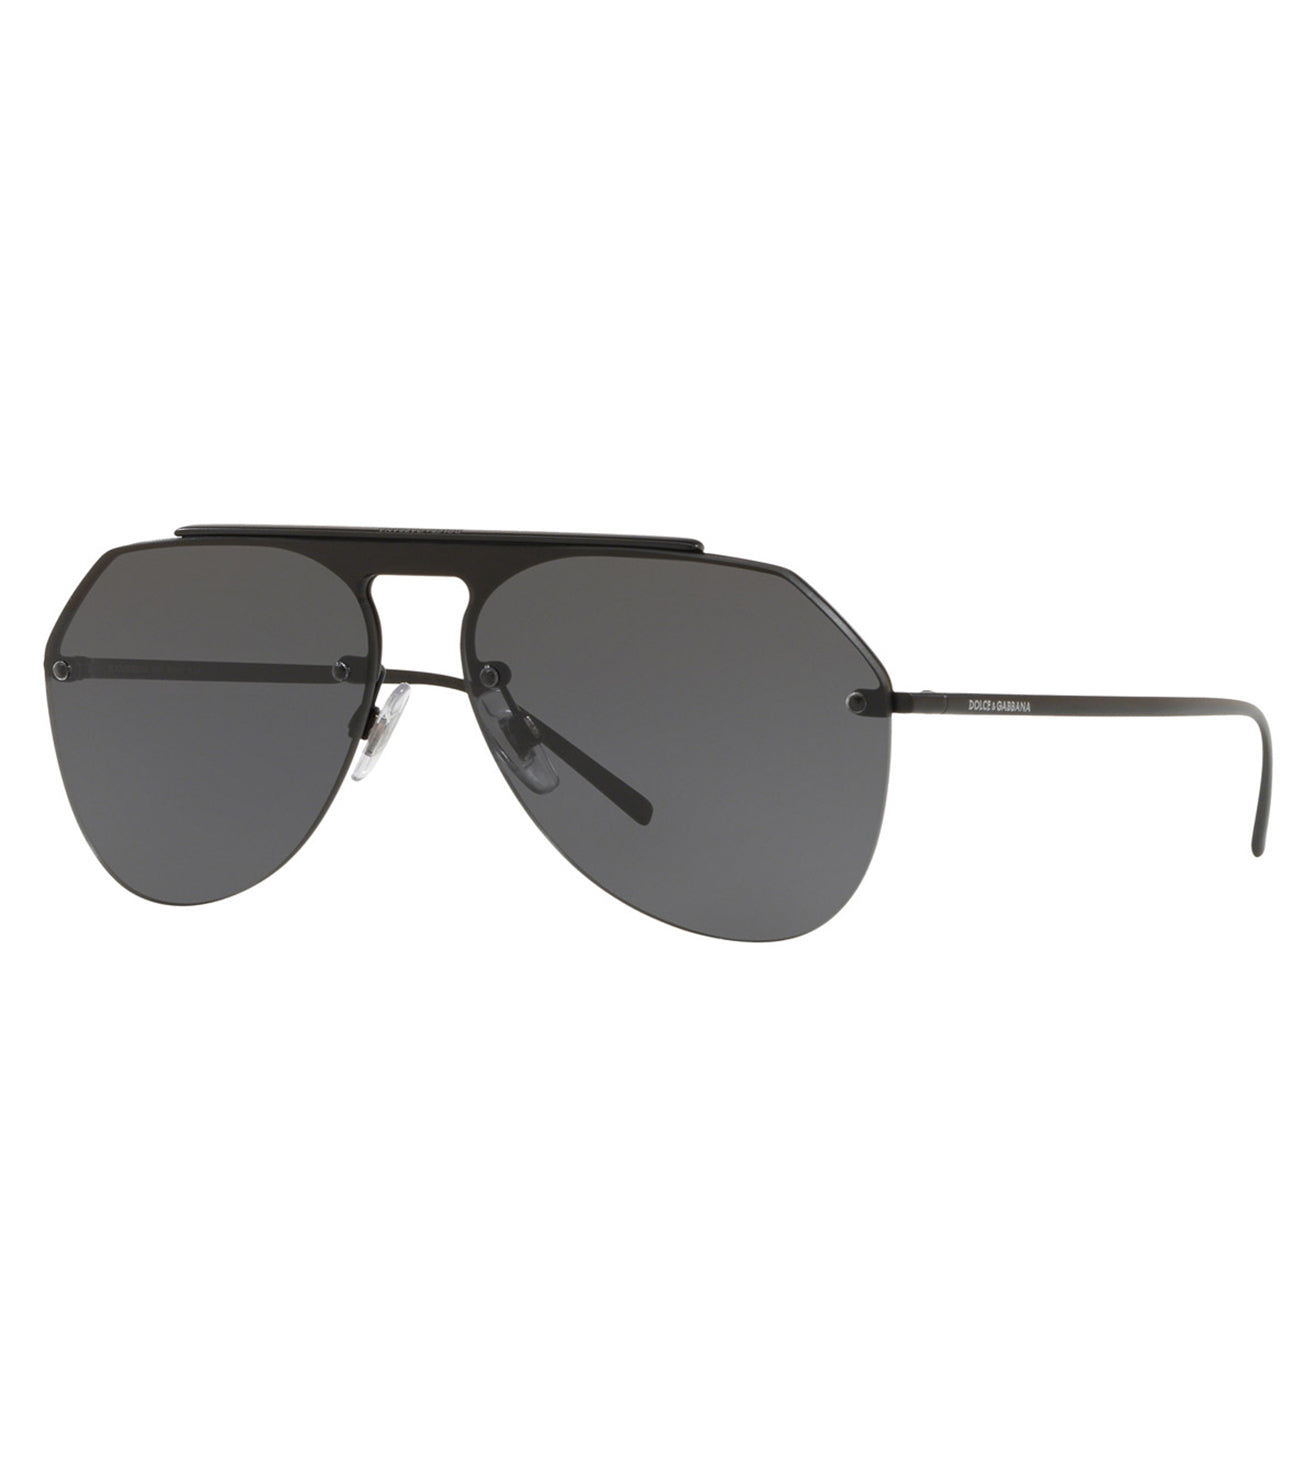 Dolce & Gabbana Men's Grey Aviator Sunglasses Sunglasses